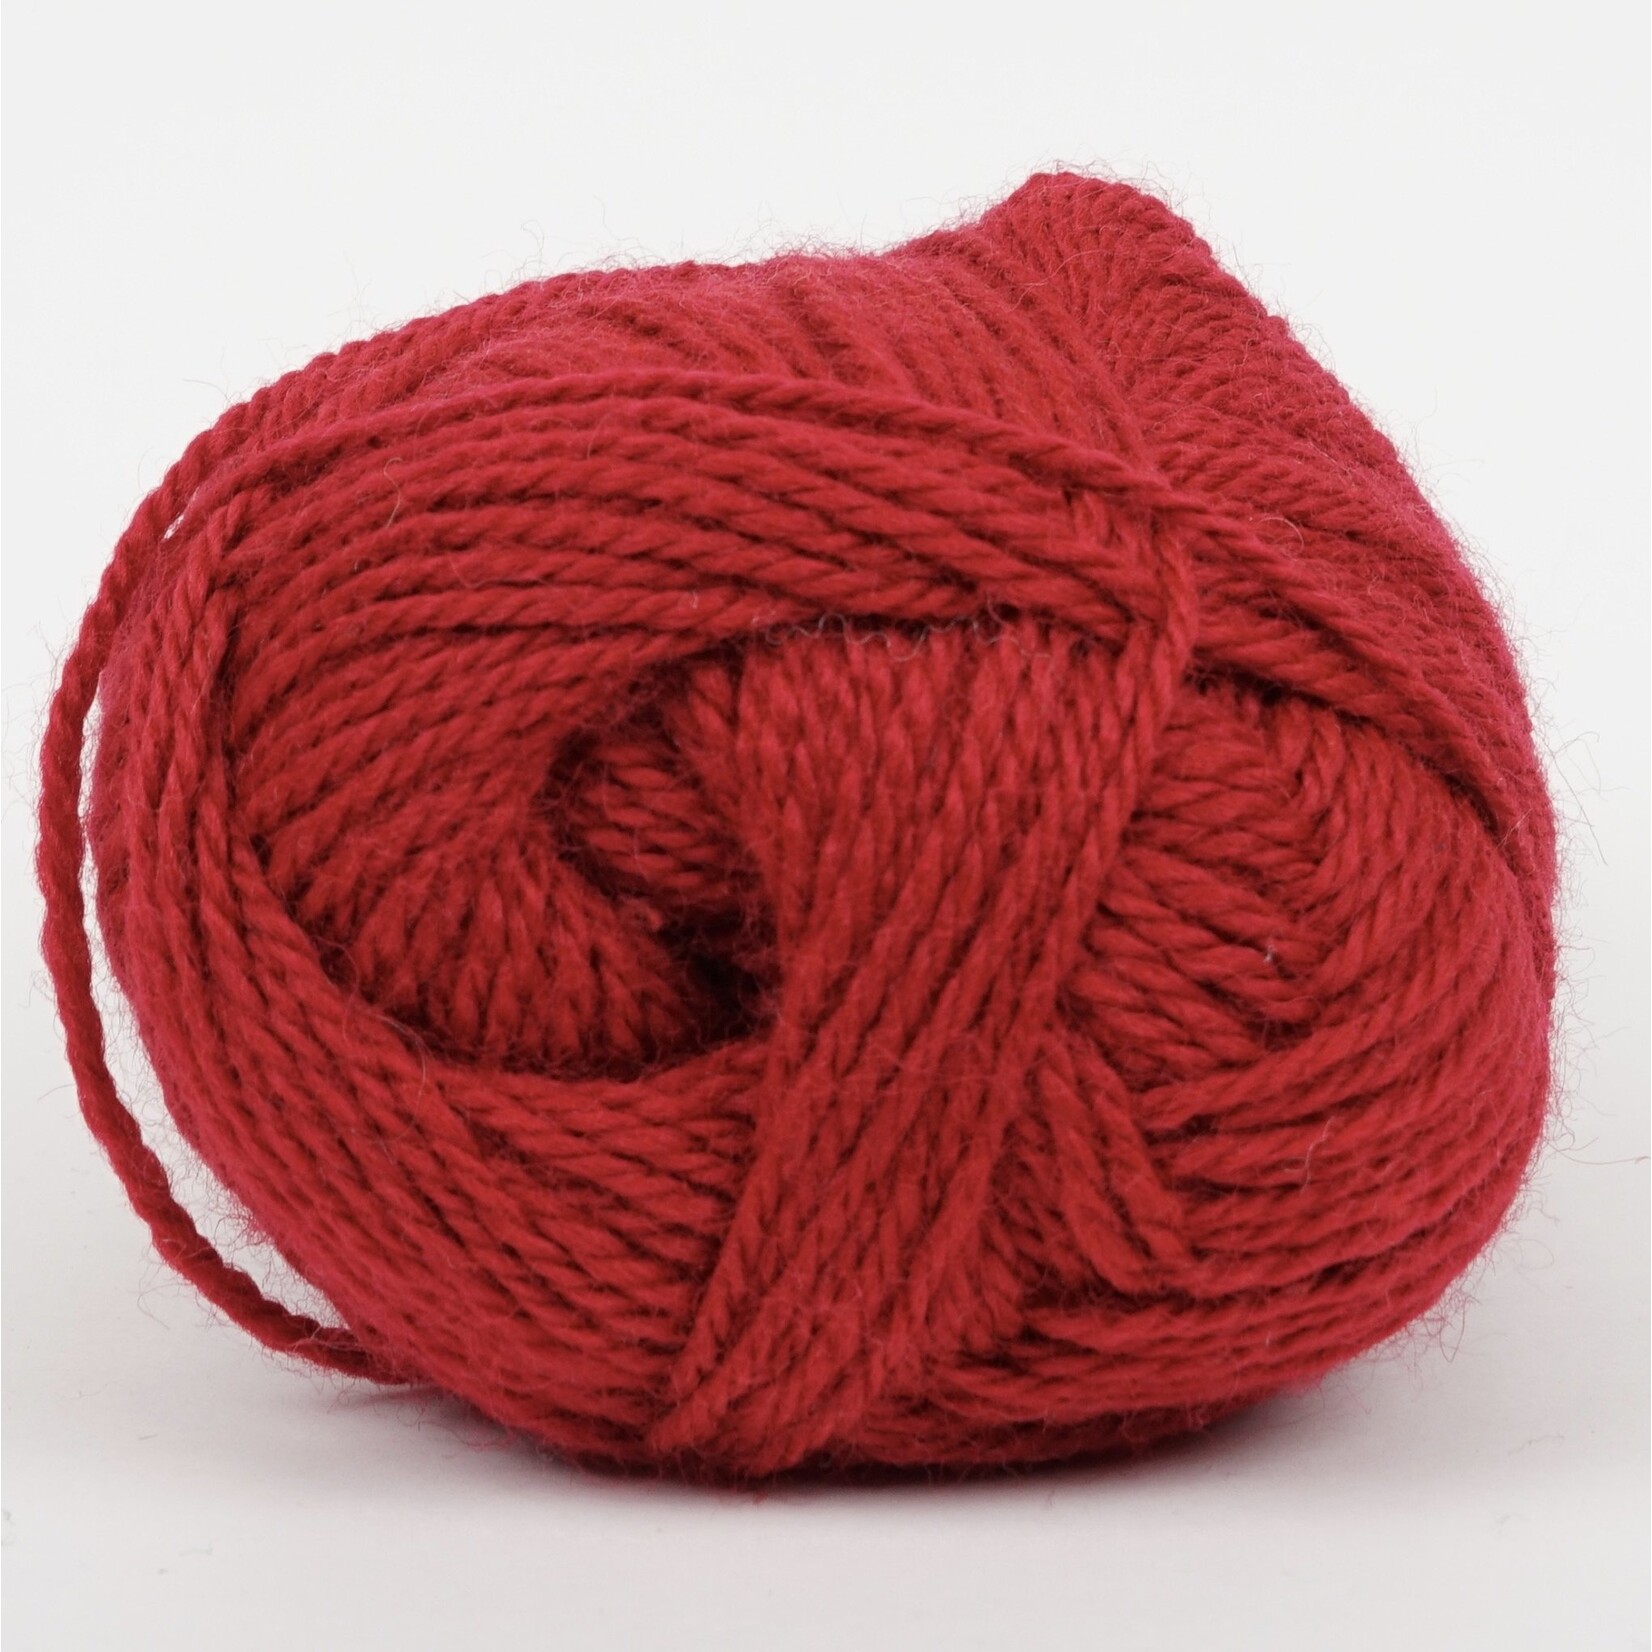 Kraemer Yarns Yarn - Perfection Worsted Crimson